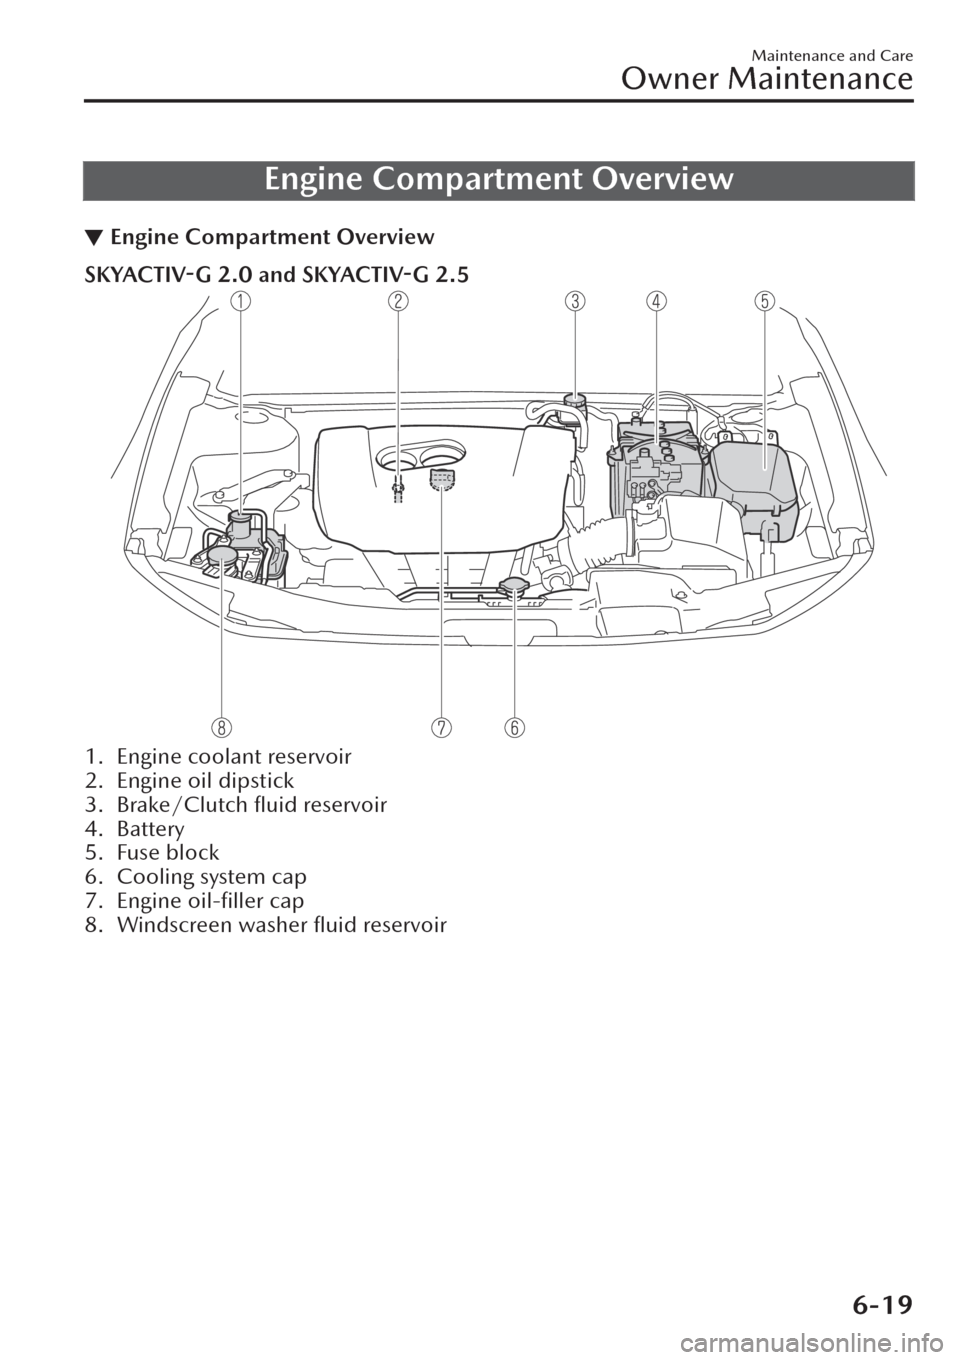 MAZDA MODEL CX-30 2019  Owners Manual (in English) Engine Compartment Overview
▼Engine Compartment Overview
SKYACTIV-G 2.0 and SKYACTIV-G 2.5
1. Engine coolant reservoir
2. Engine oil dipstick
3. Brake/Clutch ﬂuid reservoir
4. Battery
5. Fuse bloc